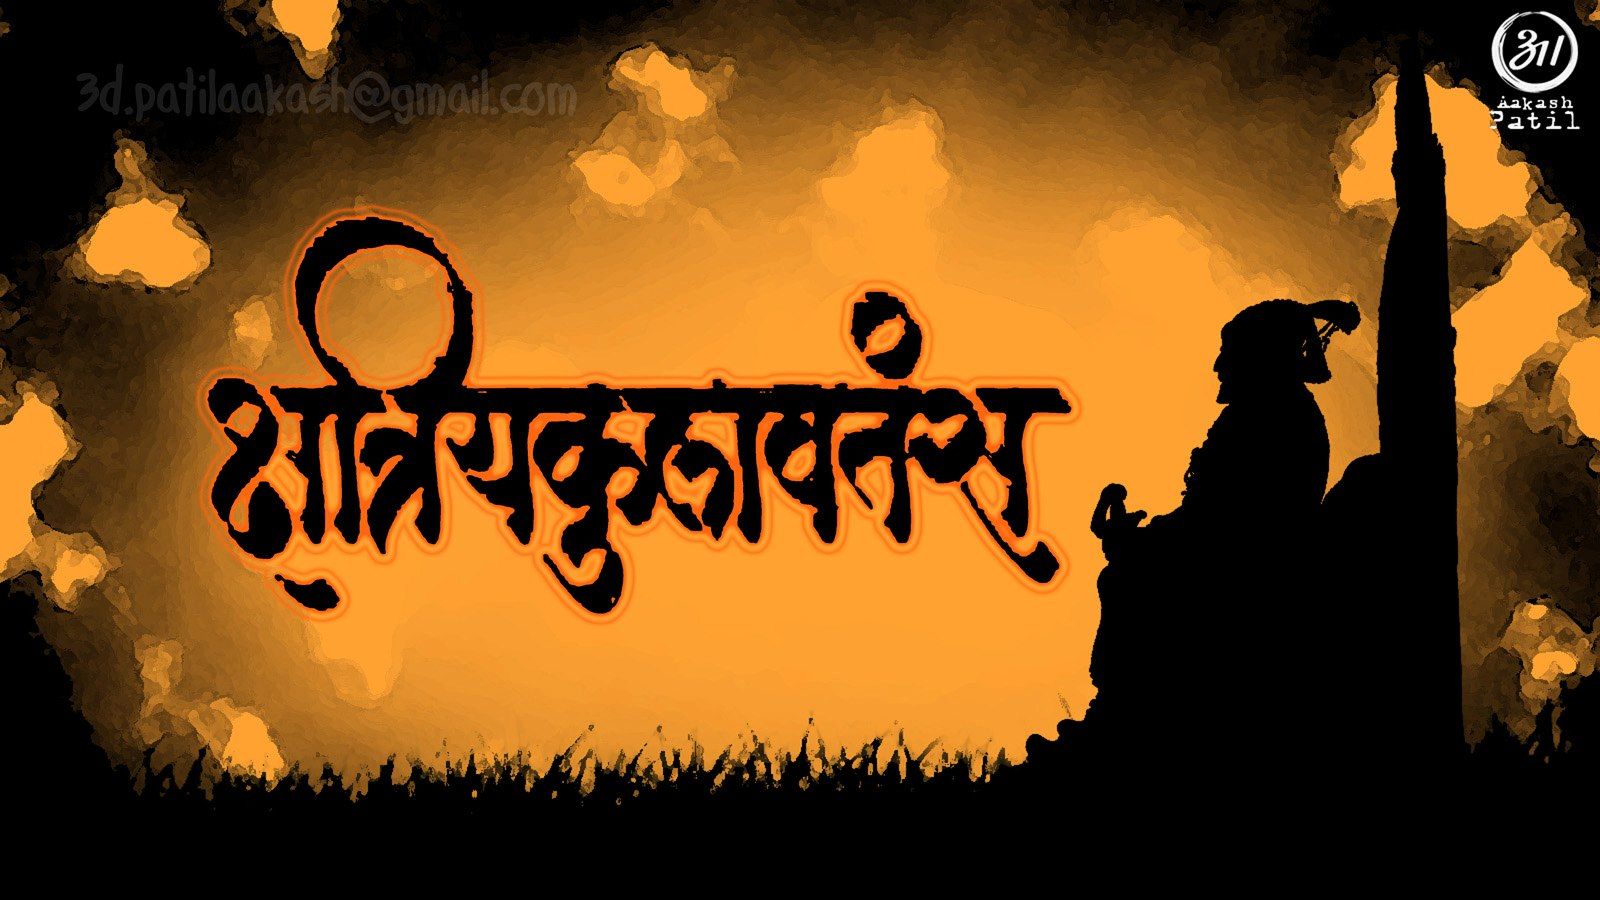 pratiksha name wallpaper,font,text,graphics